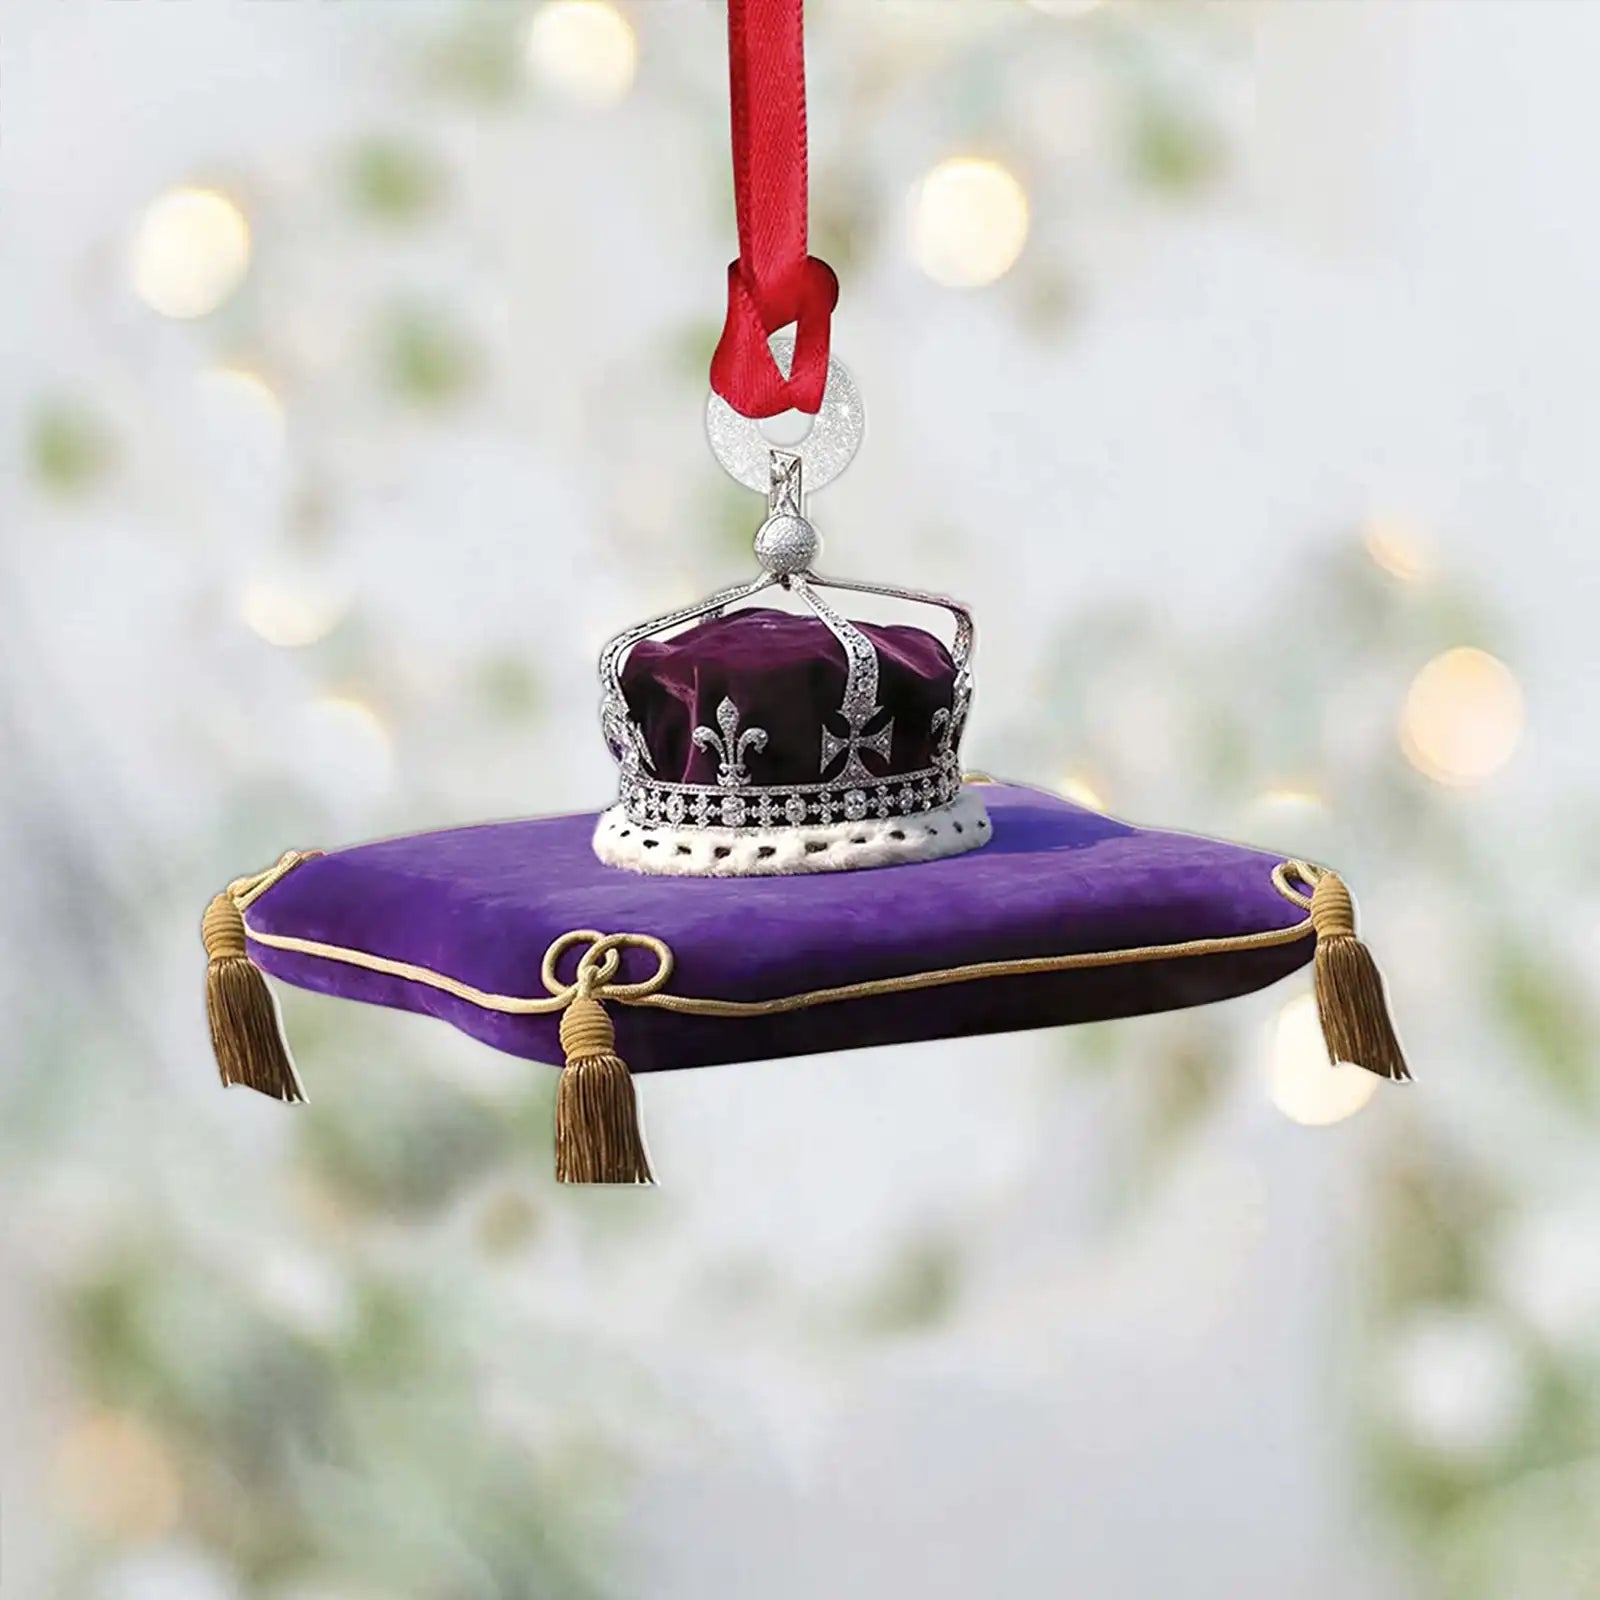 The Queen Elizabeth II - Crown Purple Mica Ornaments, Commemorating Christmas